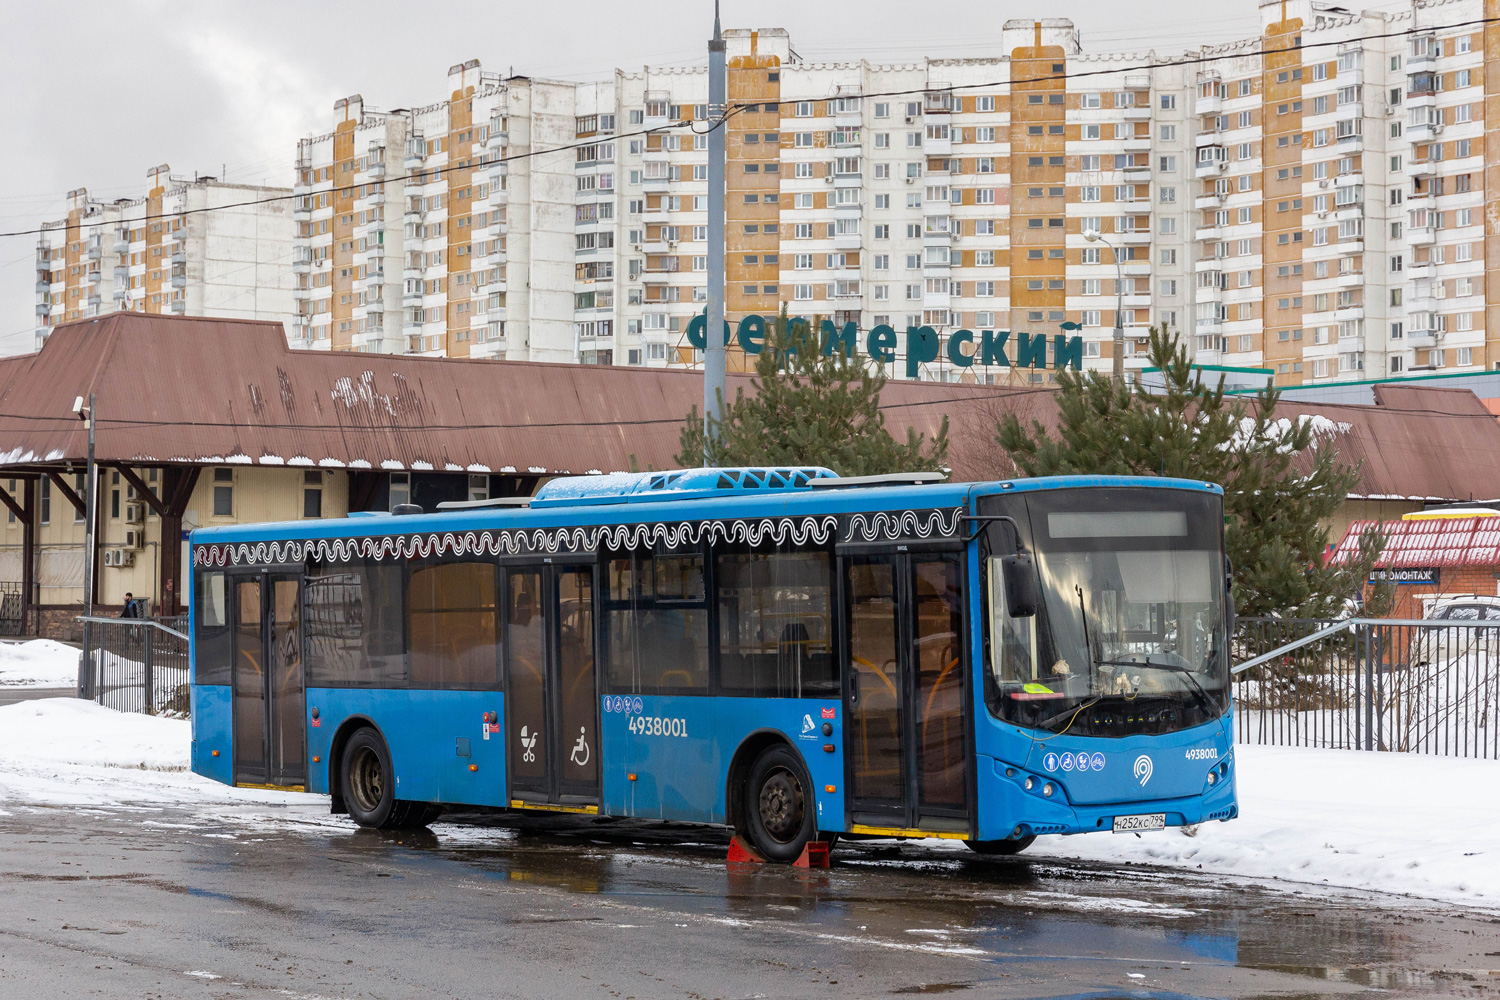 Moszkva, Volgabus-5270.02 sz.: 4938001